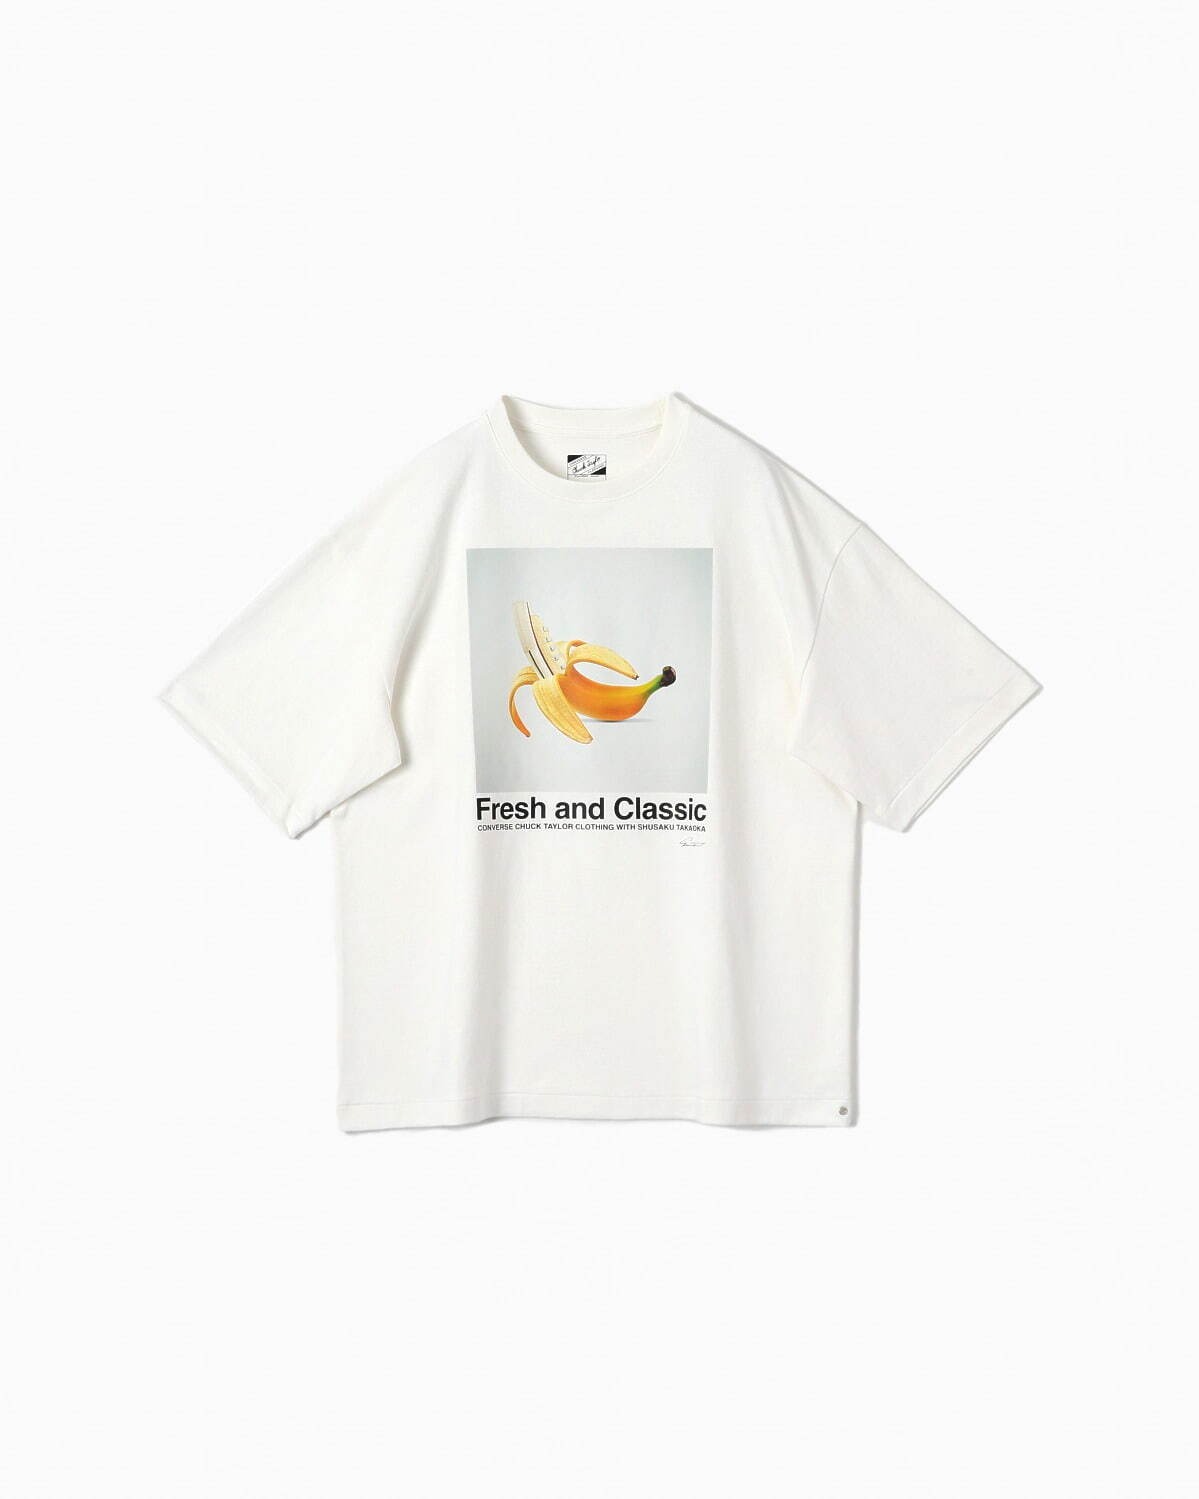 Converse Japan's boxy white banana T-shirt